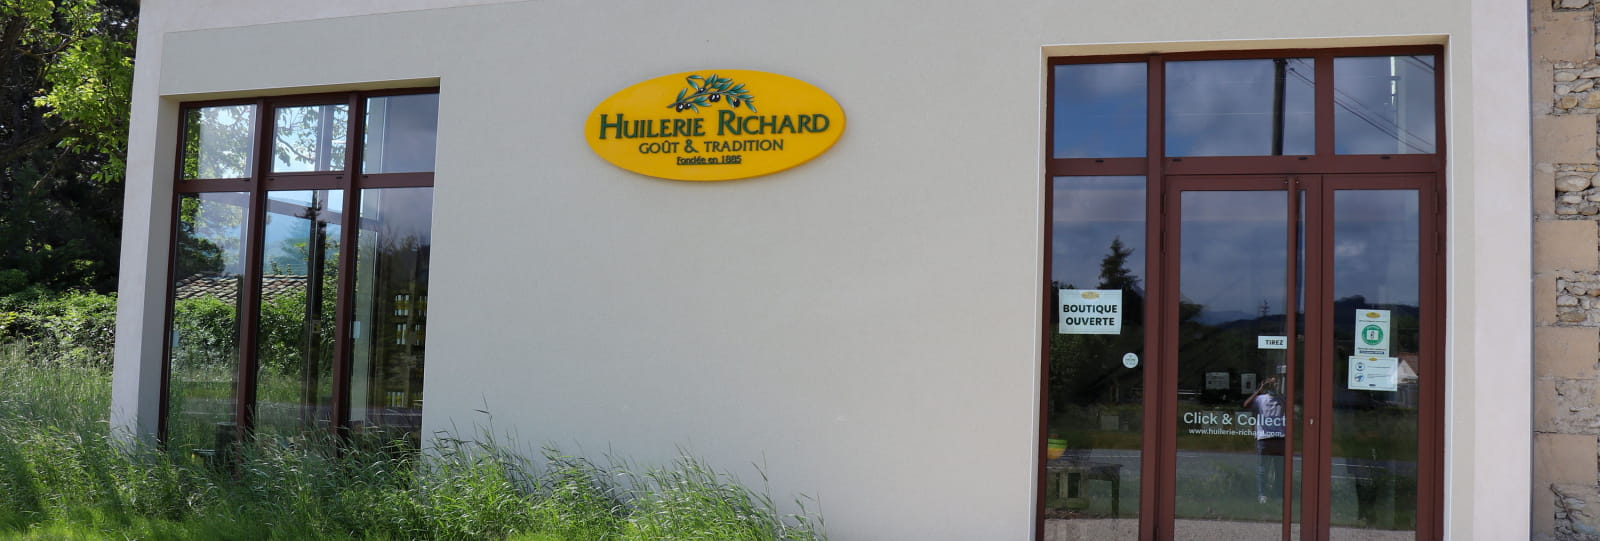 Huilier inox Huilerie Richard - Huilerie Richard - Artisan moulinier depuis  1885